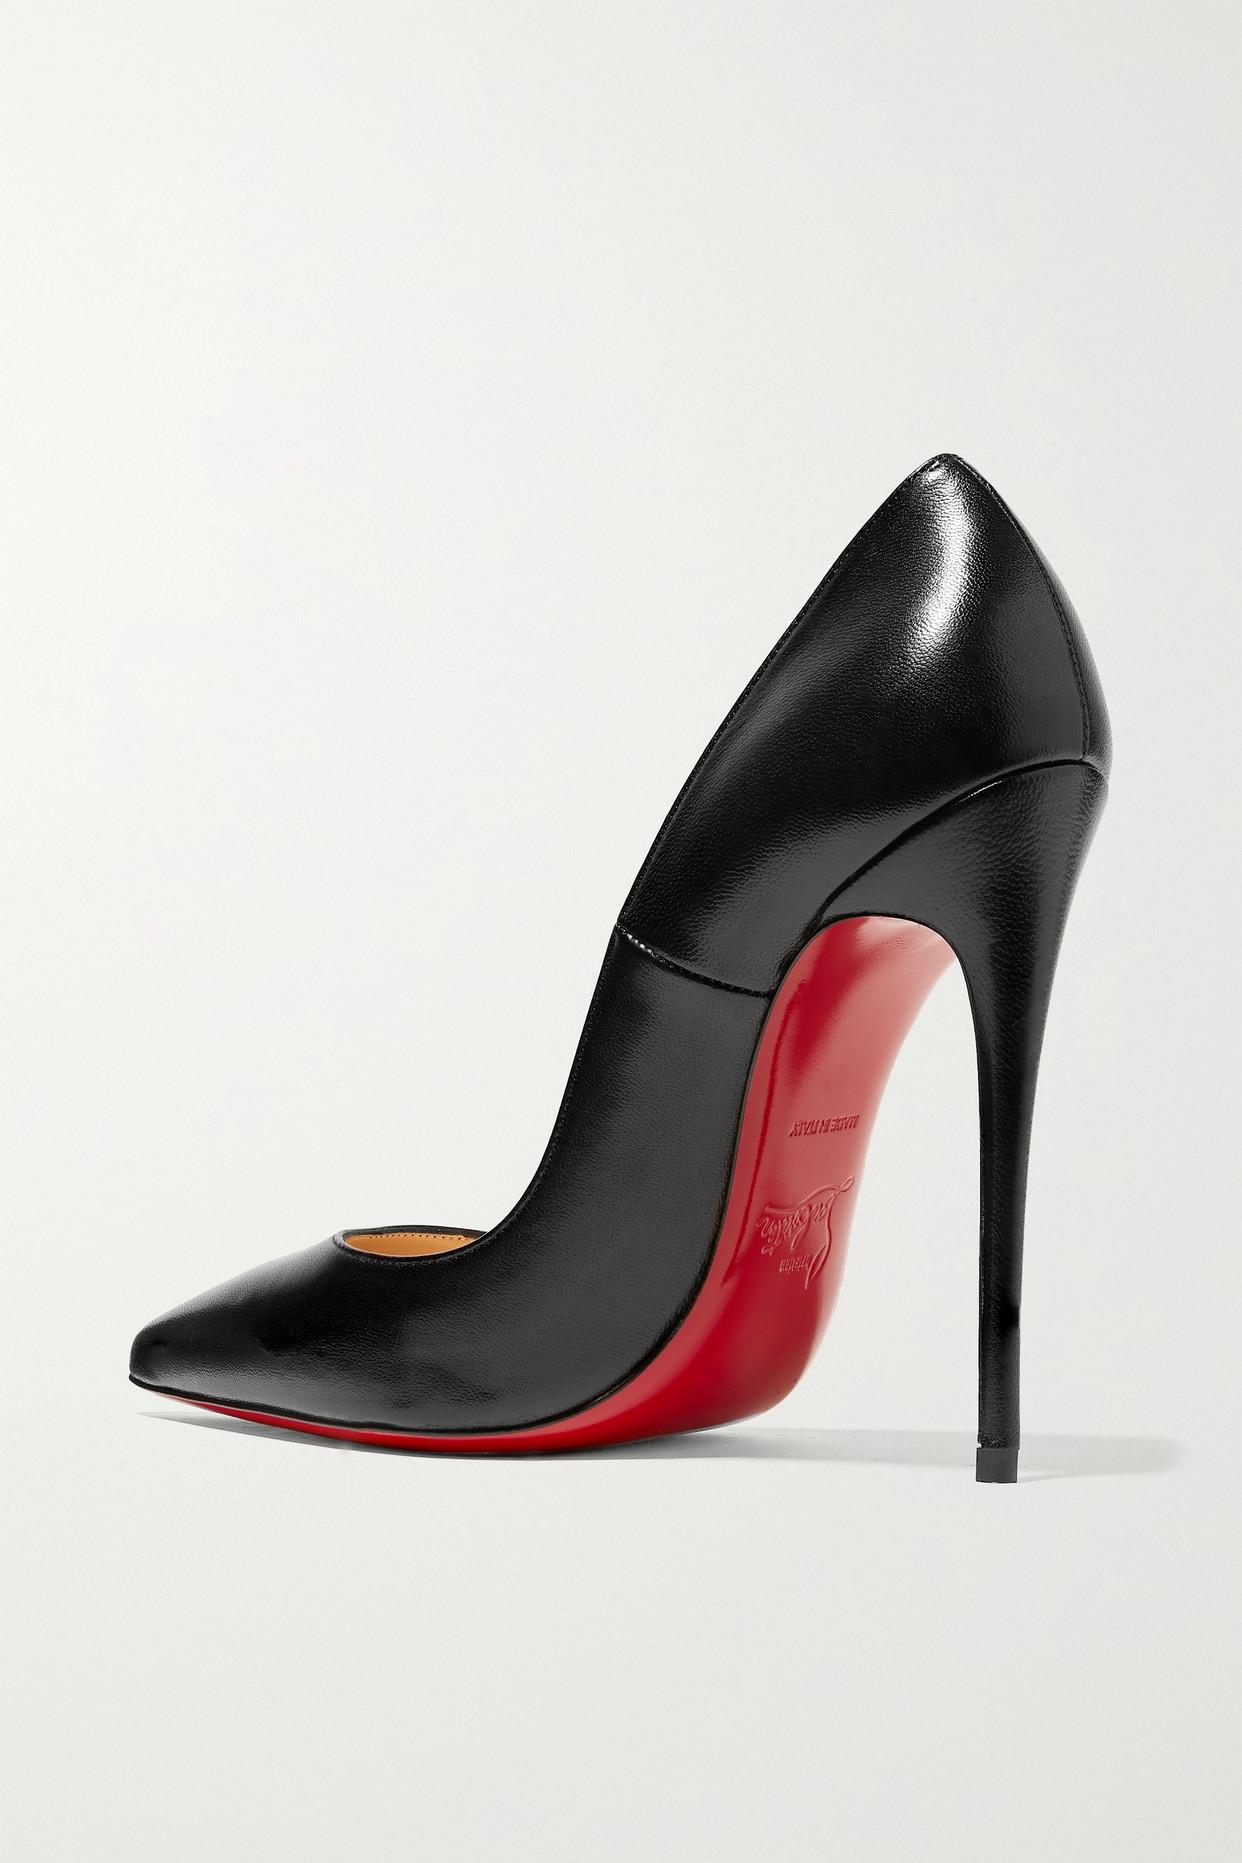 Christian Louboutin So Kate 120 Black Patent Leather - Women Shoes